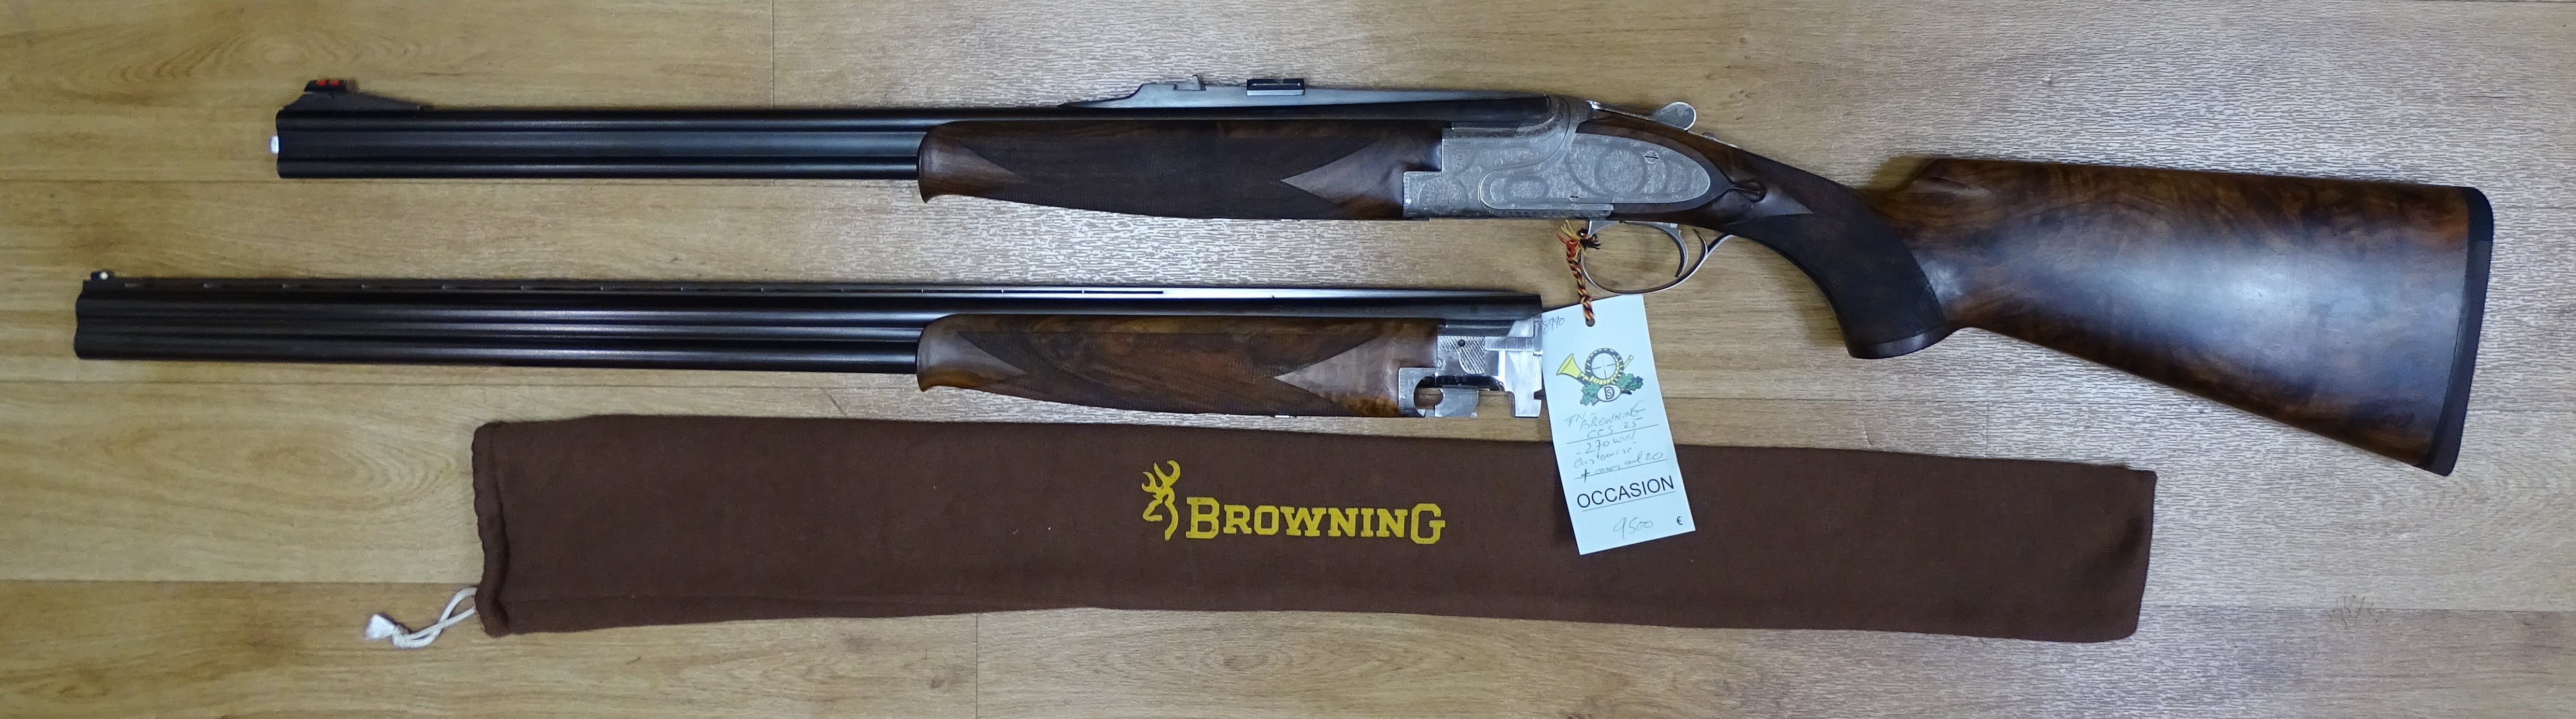 FN-Browning CCS 25 